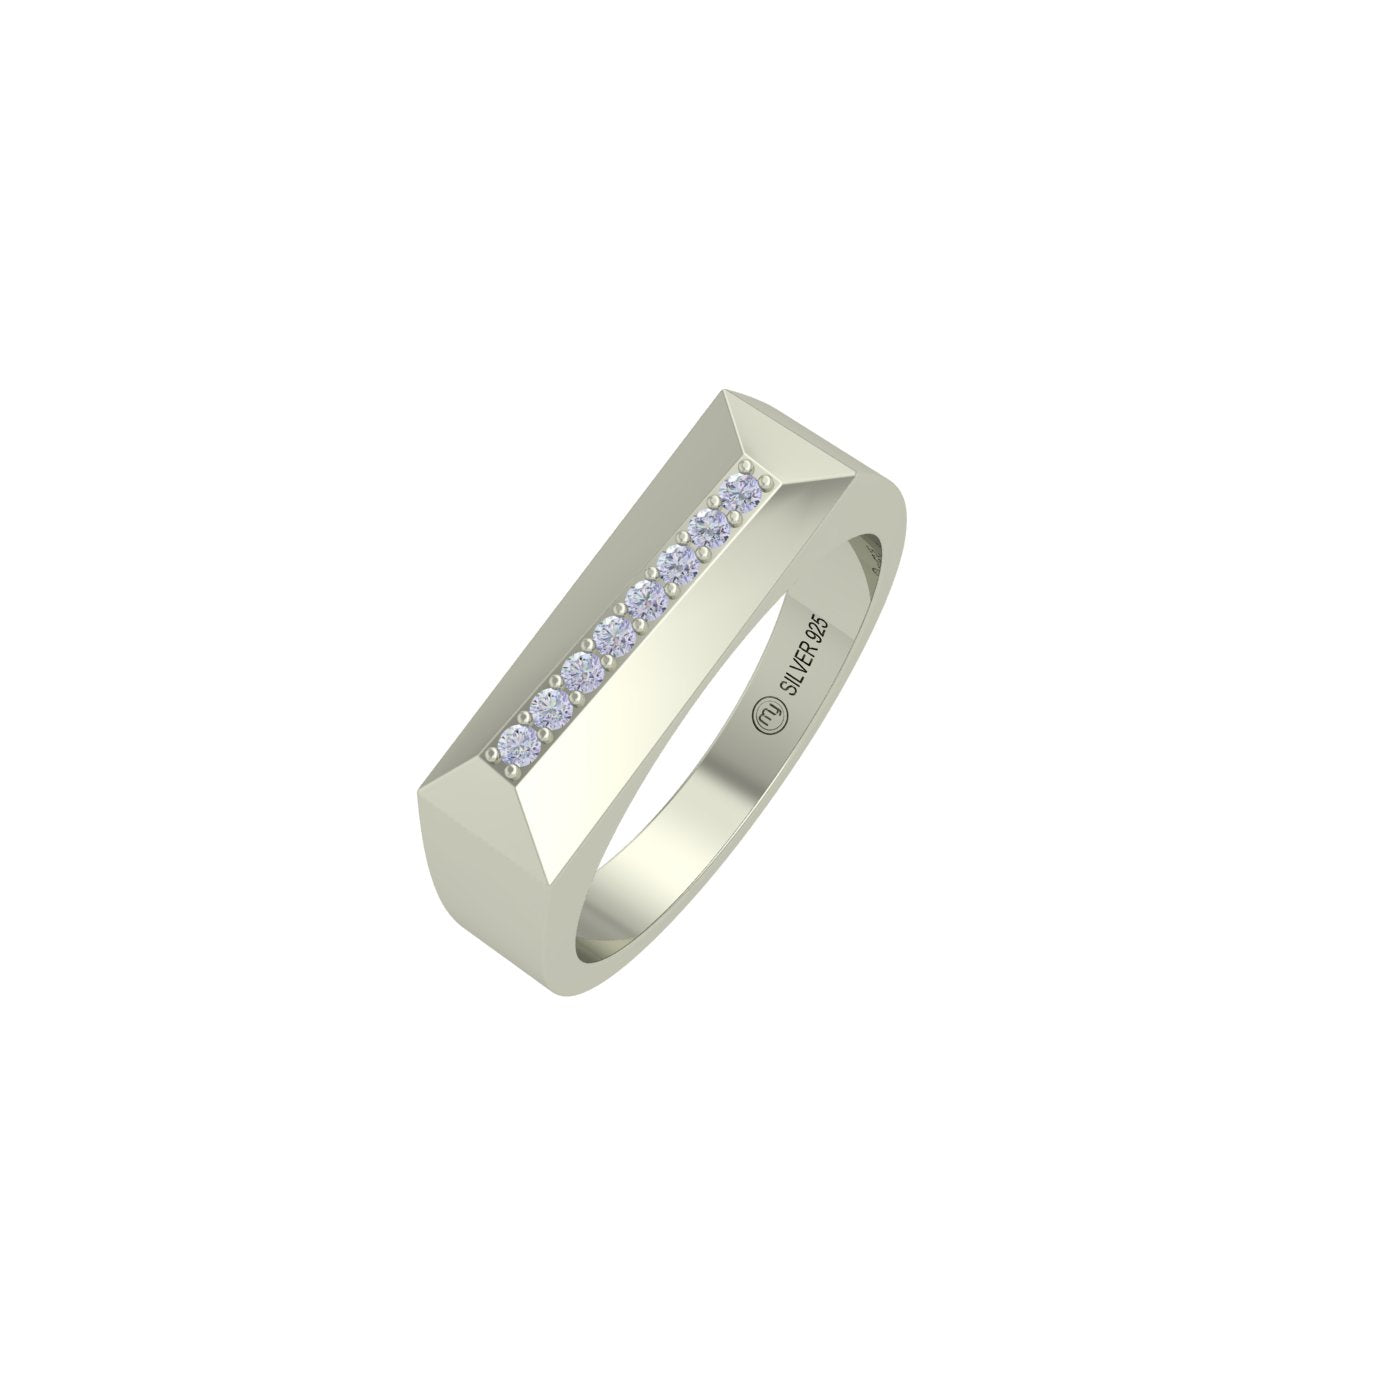 Axis Diamond Men's Ring